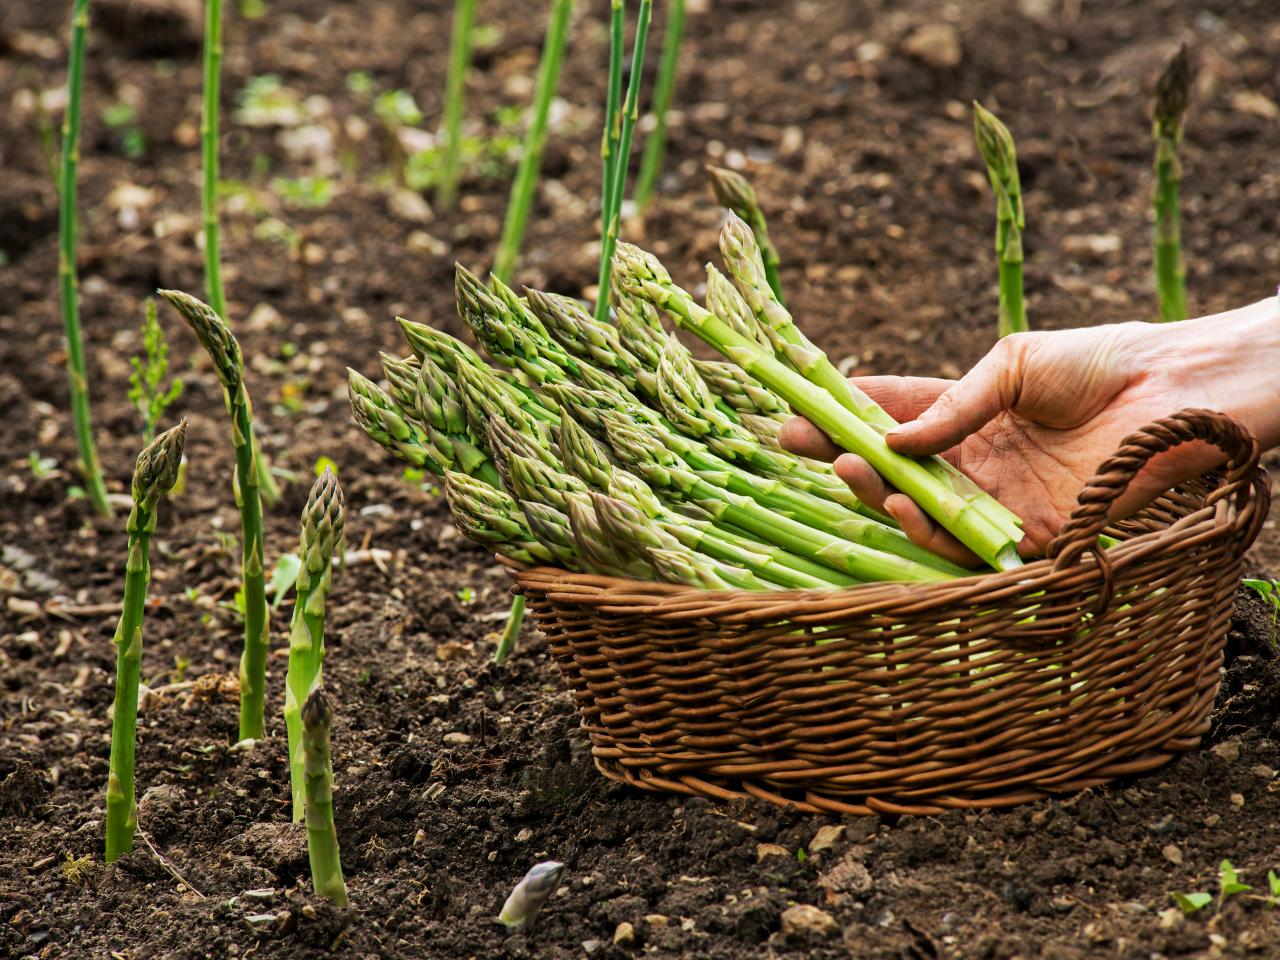 how to grow asparagus in your home garden | hgtv